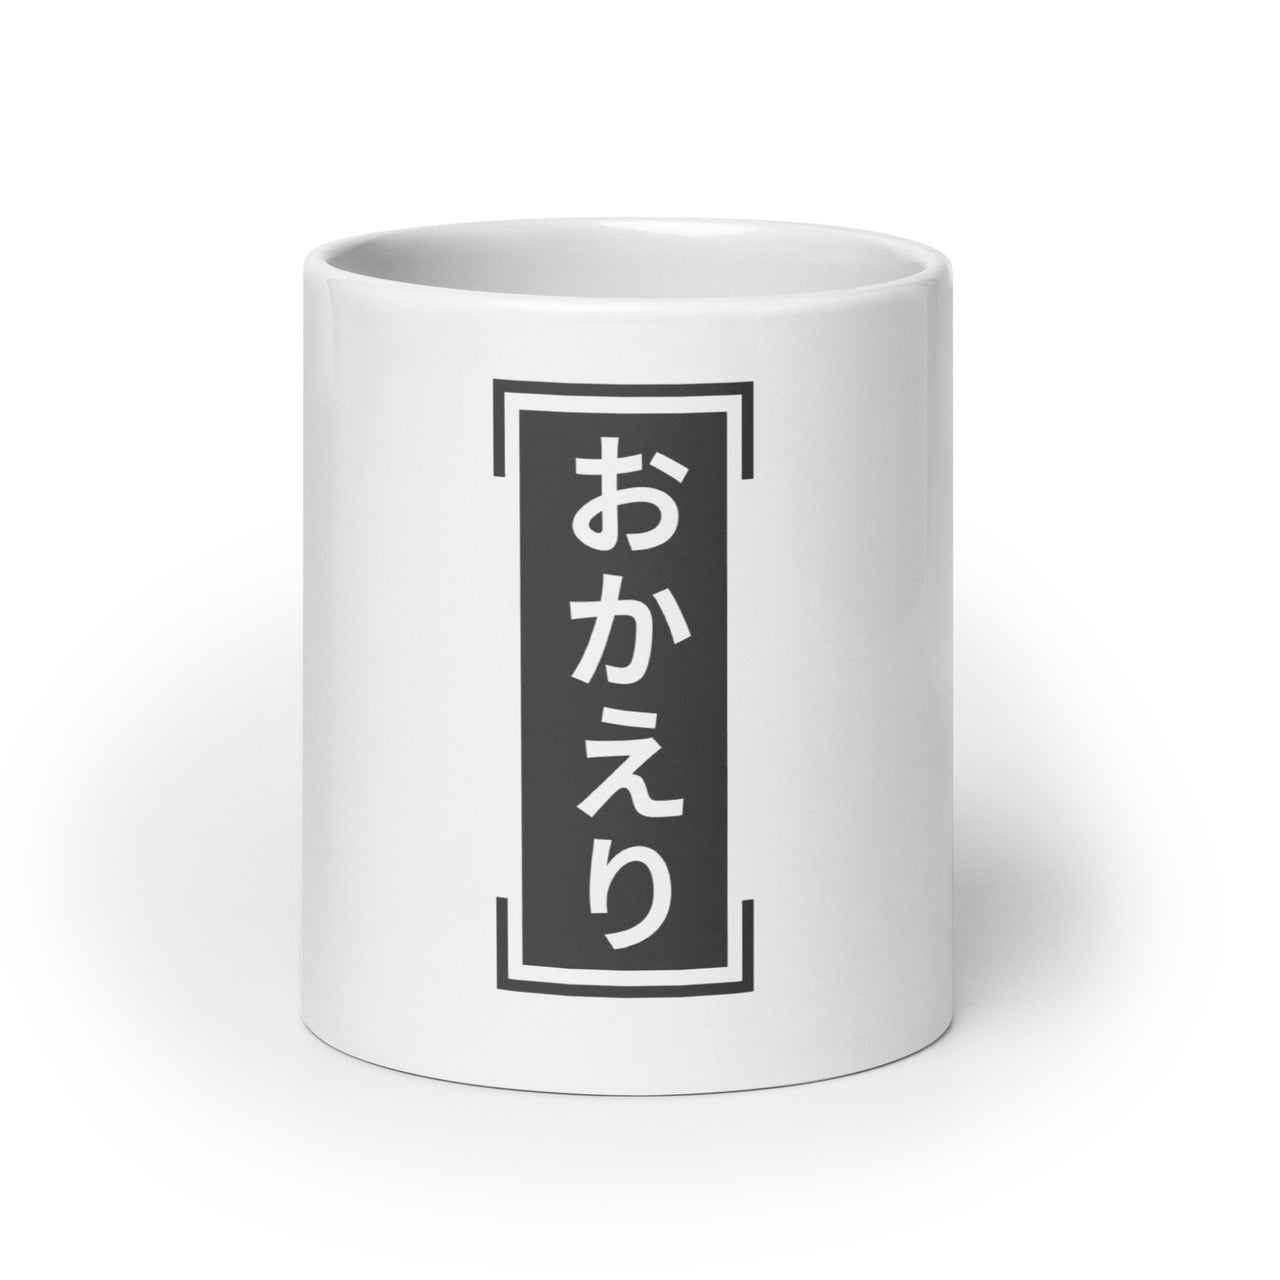 Japanese "Okaeri" Welcome Back | Japanese-themed mug